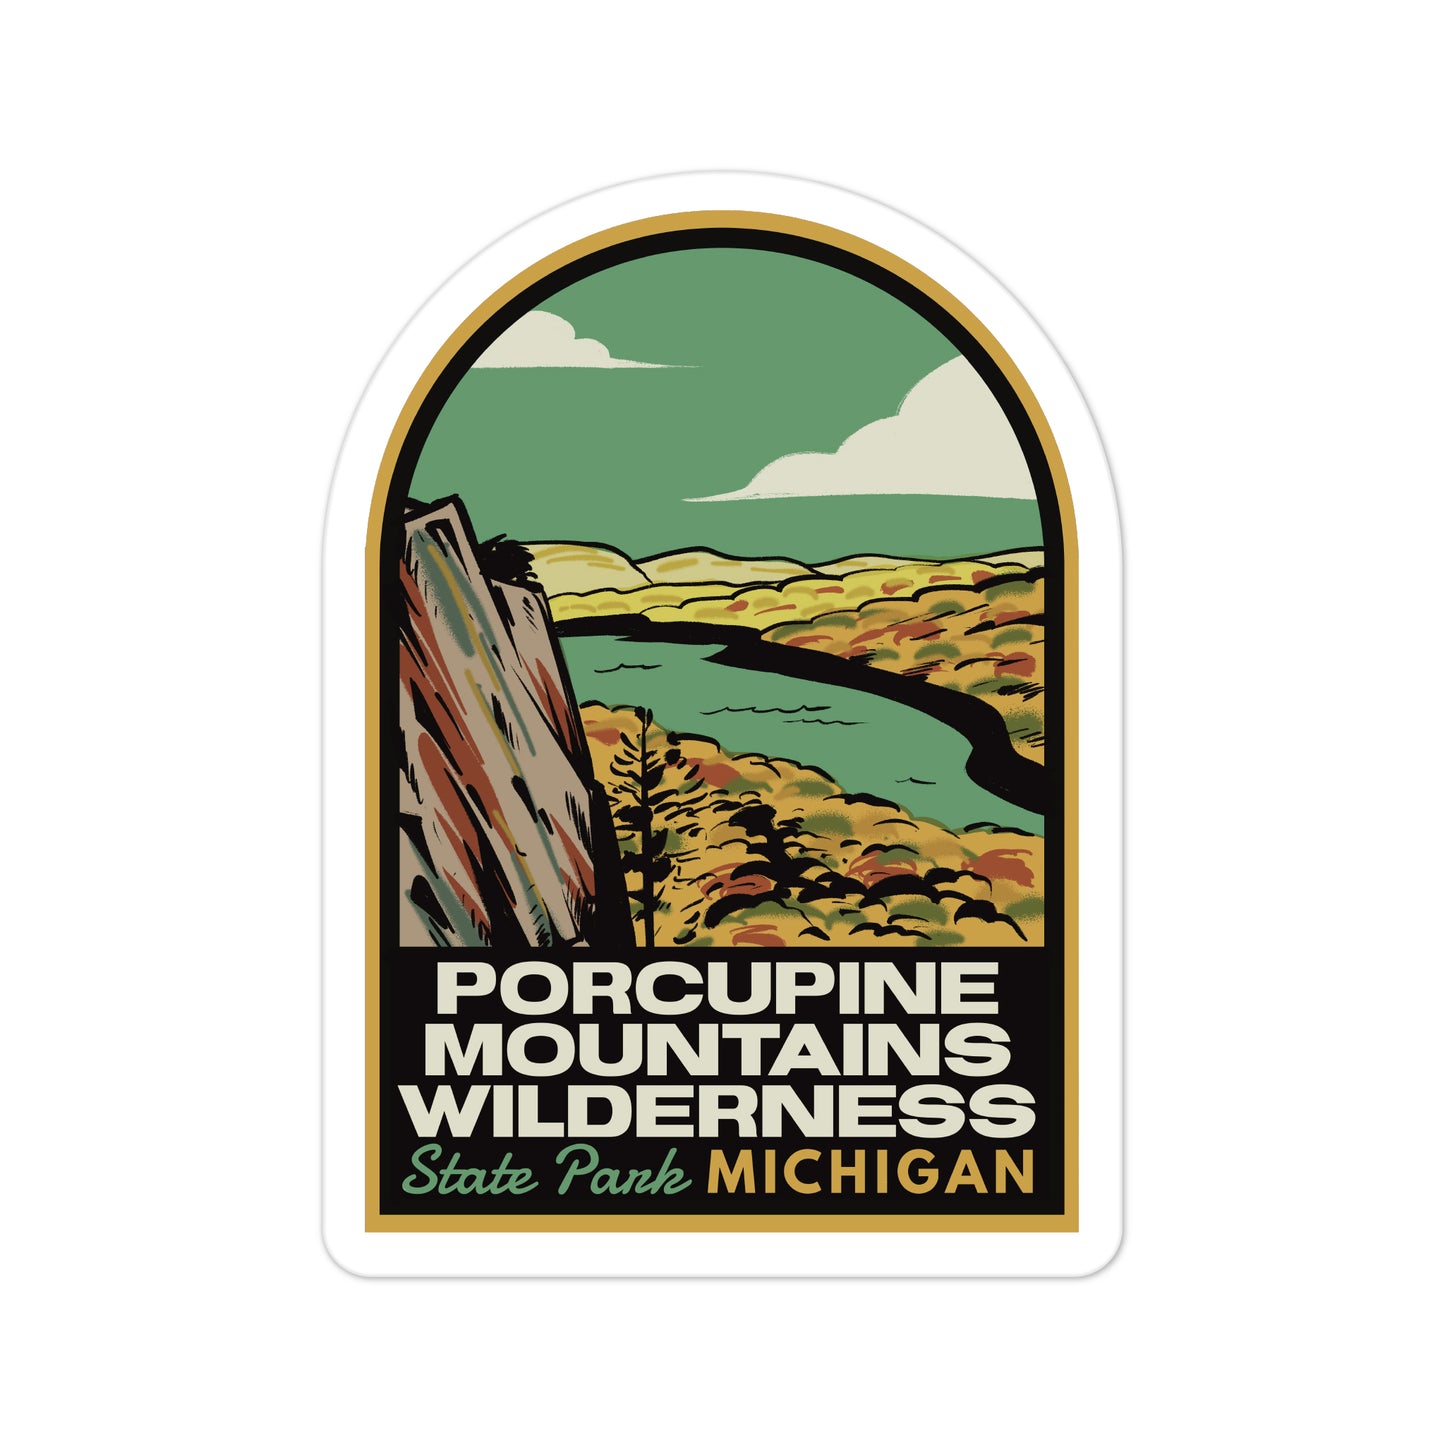 A sticker of Porcupine Mountains Wilderness